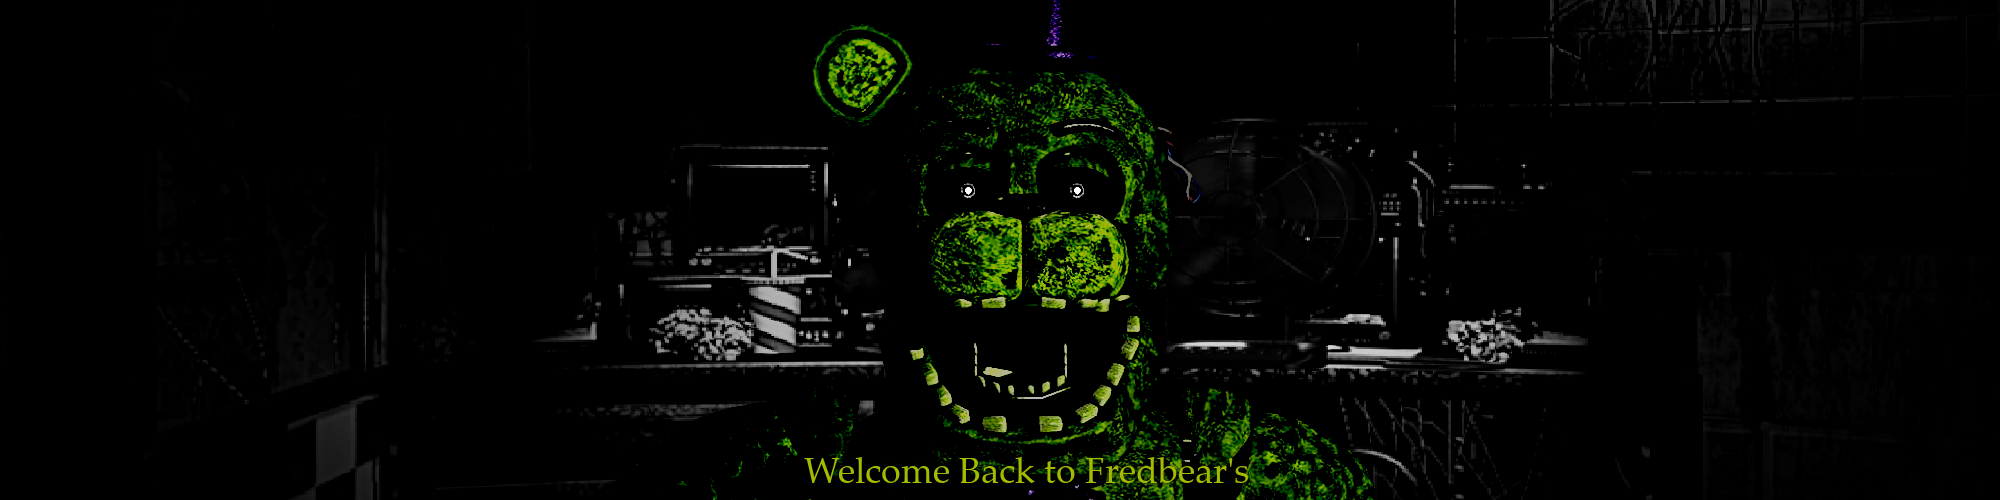 Welcome Back to Fredbear's